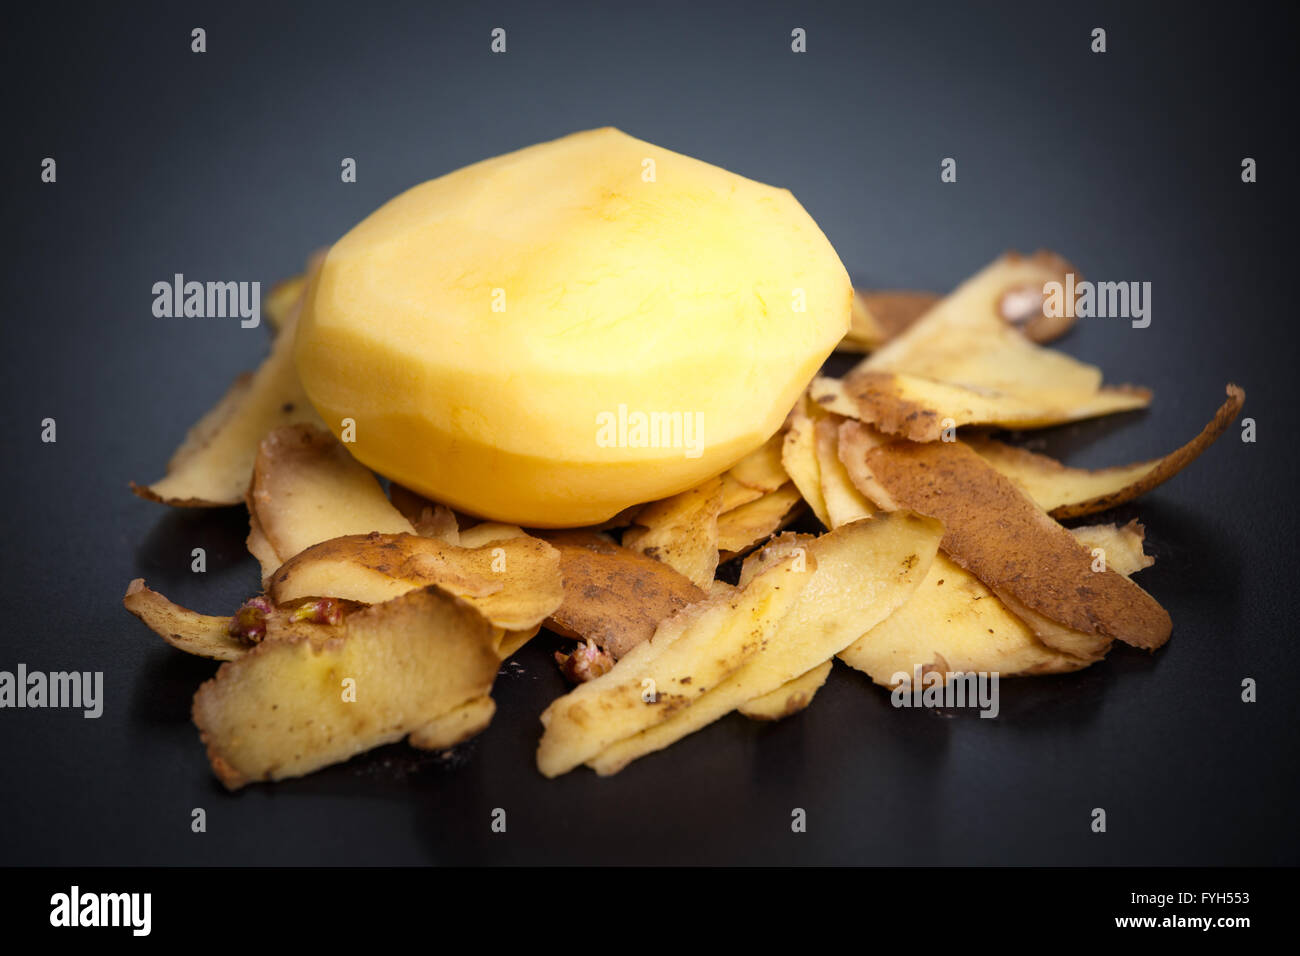 Raw peeled potatoes and potato peelings on black background Stock Photo